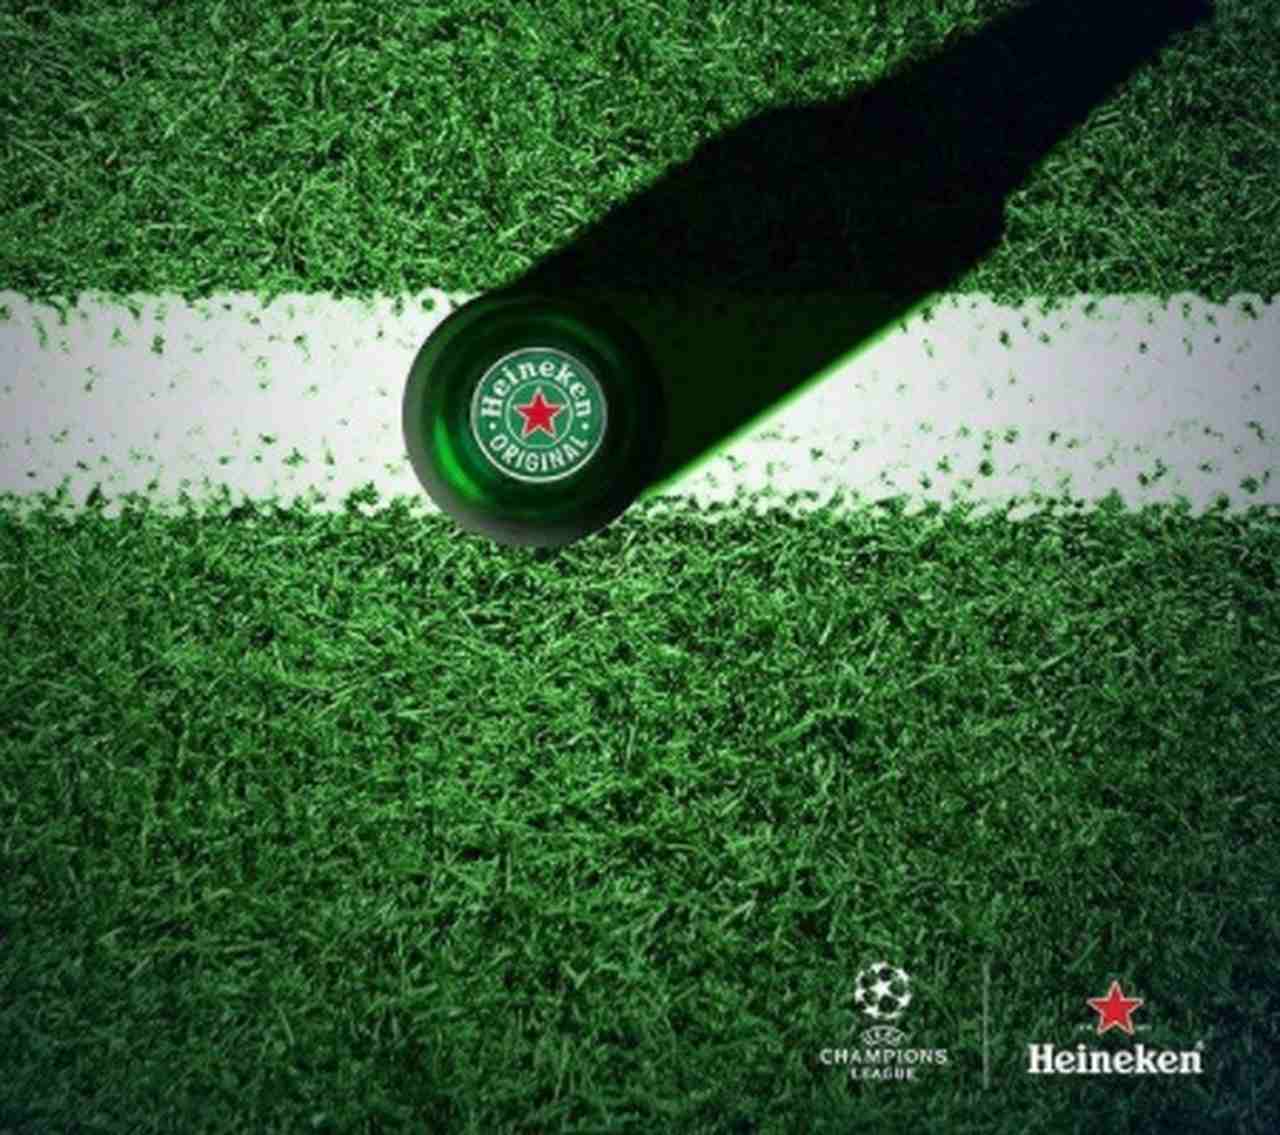 Heineken Liga dos Campeões